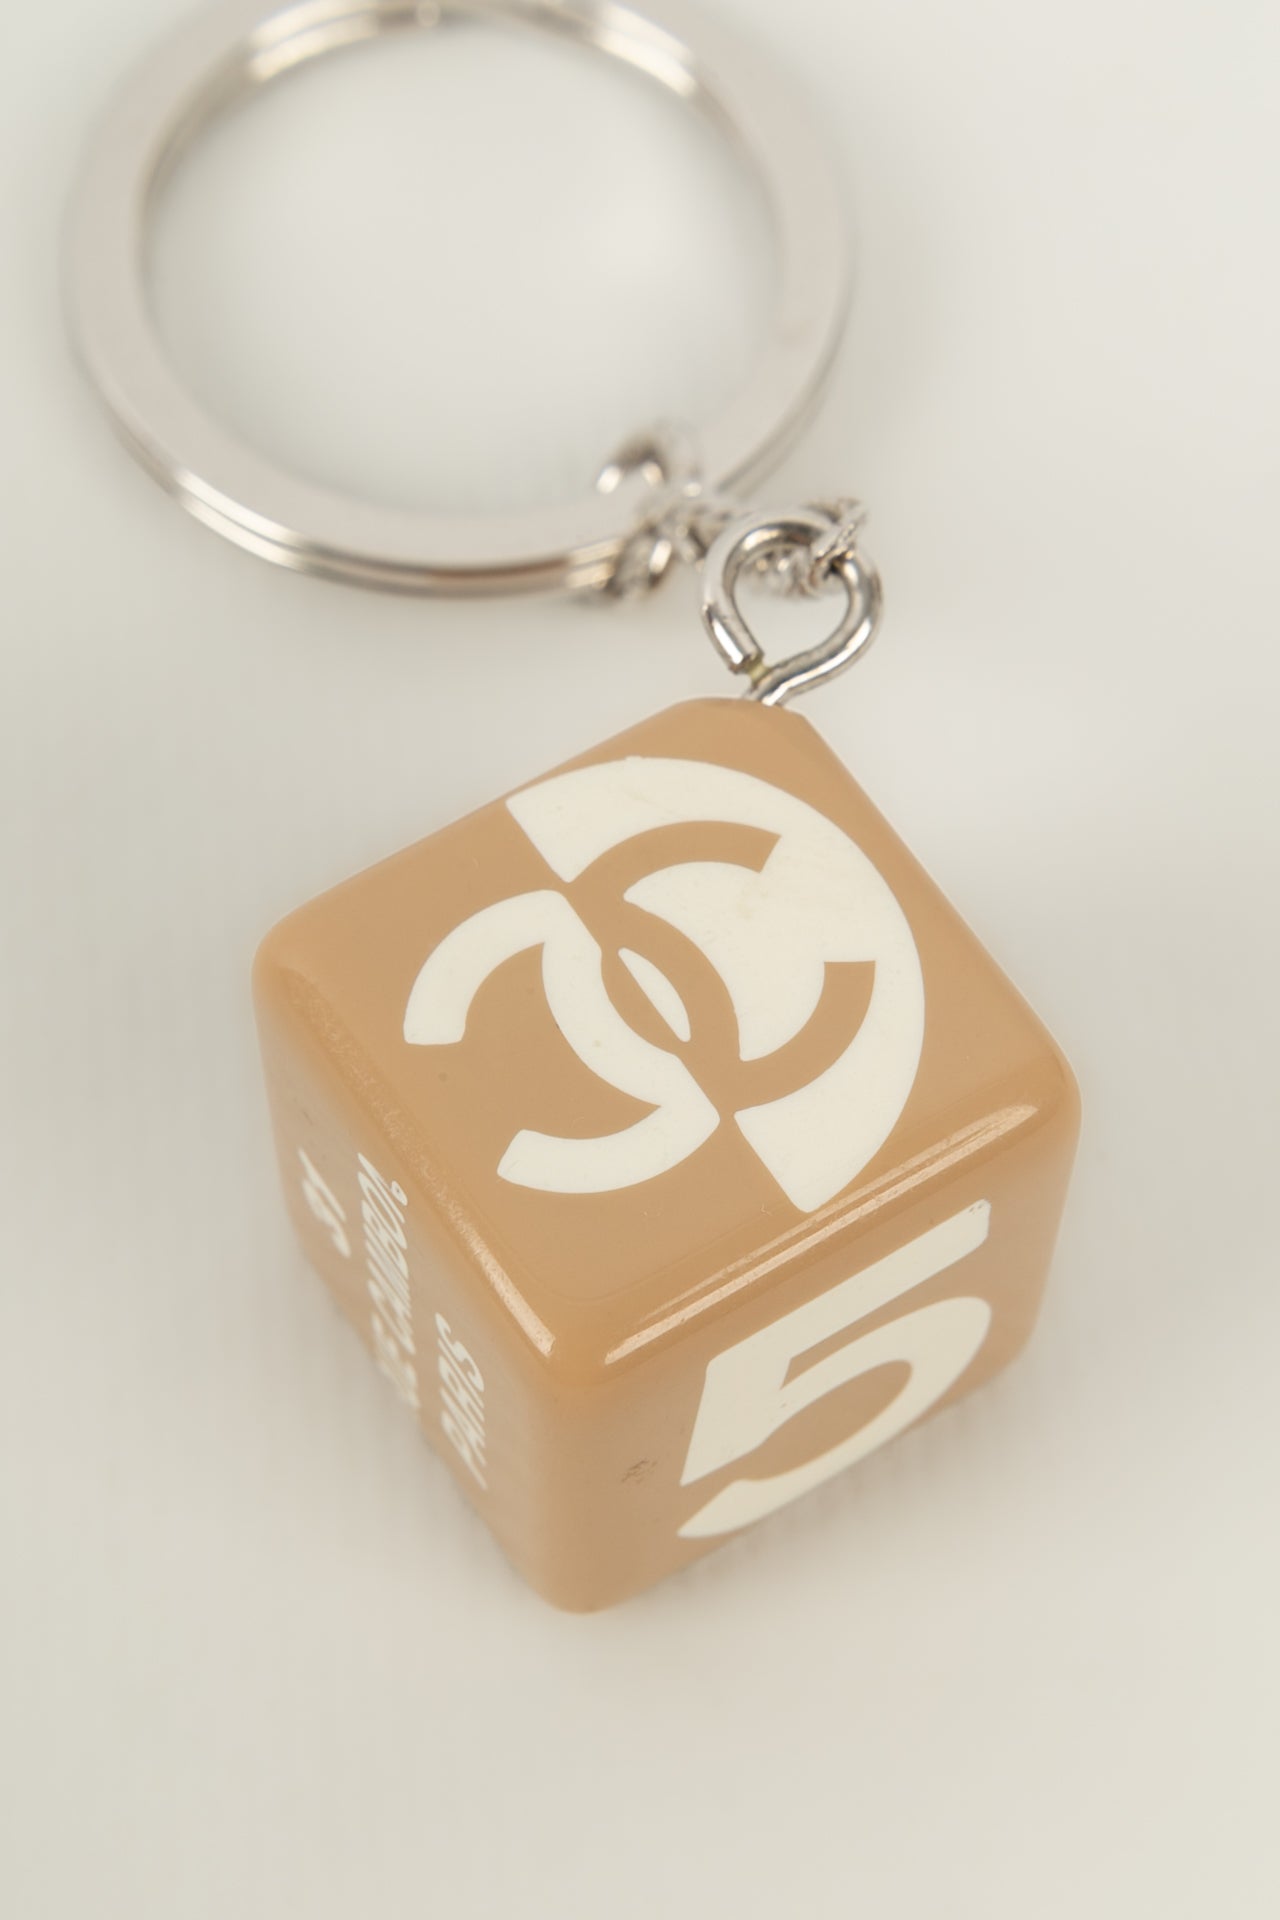 Chanel key ring – Les Merveilles De Babellou